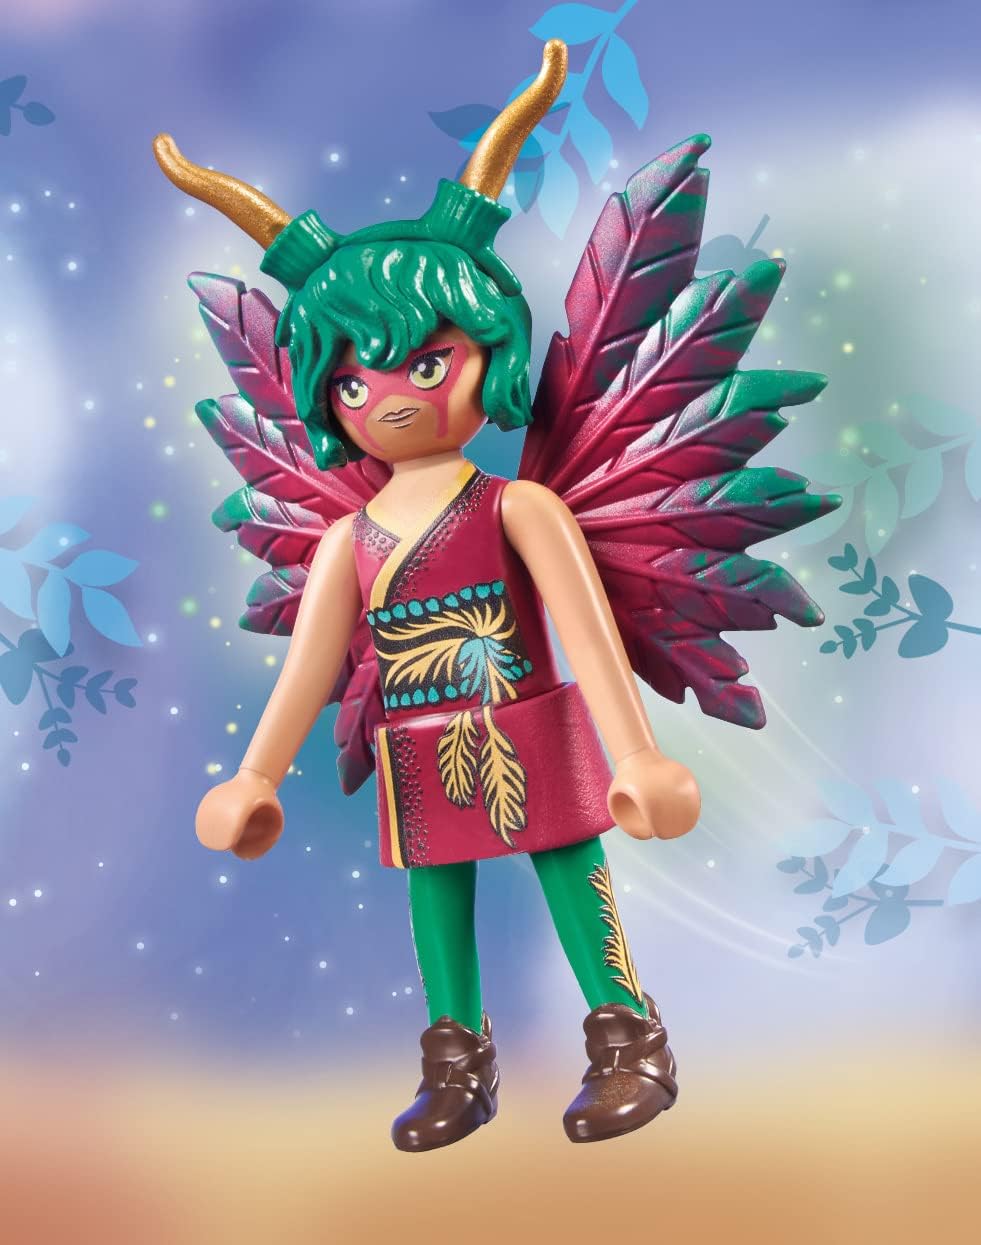 Playmobil 71182 Adventures of Ayuma - Knight Fairy Josy, fairies, Ayuma fairy, fAiries, Mystical Adventures